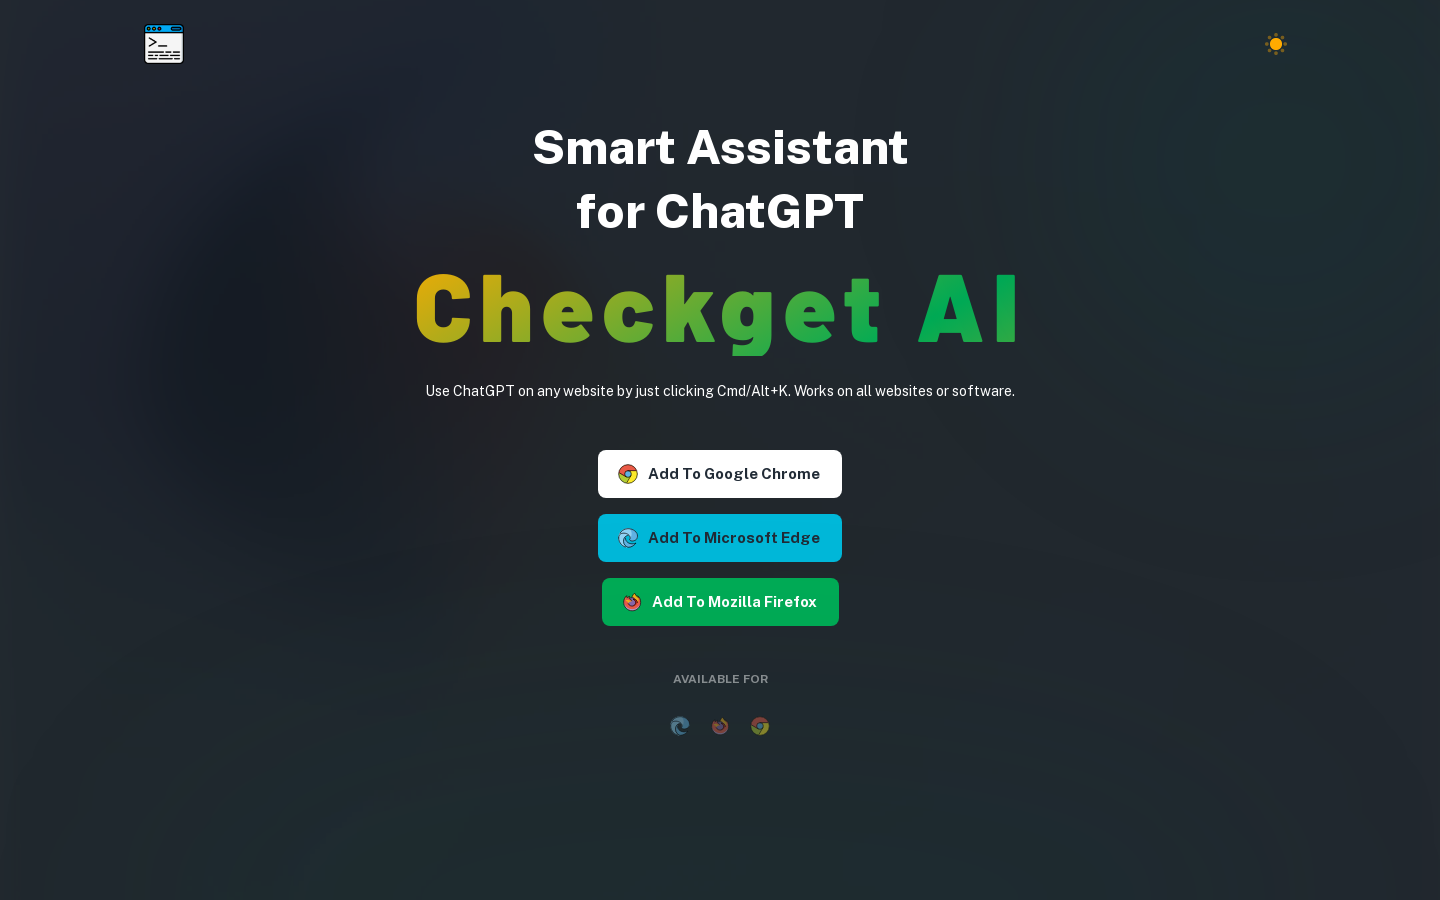 Checkget AI preview